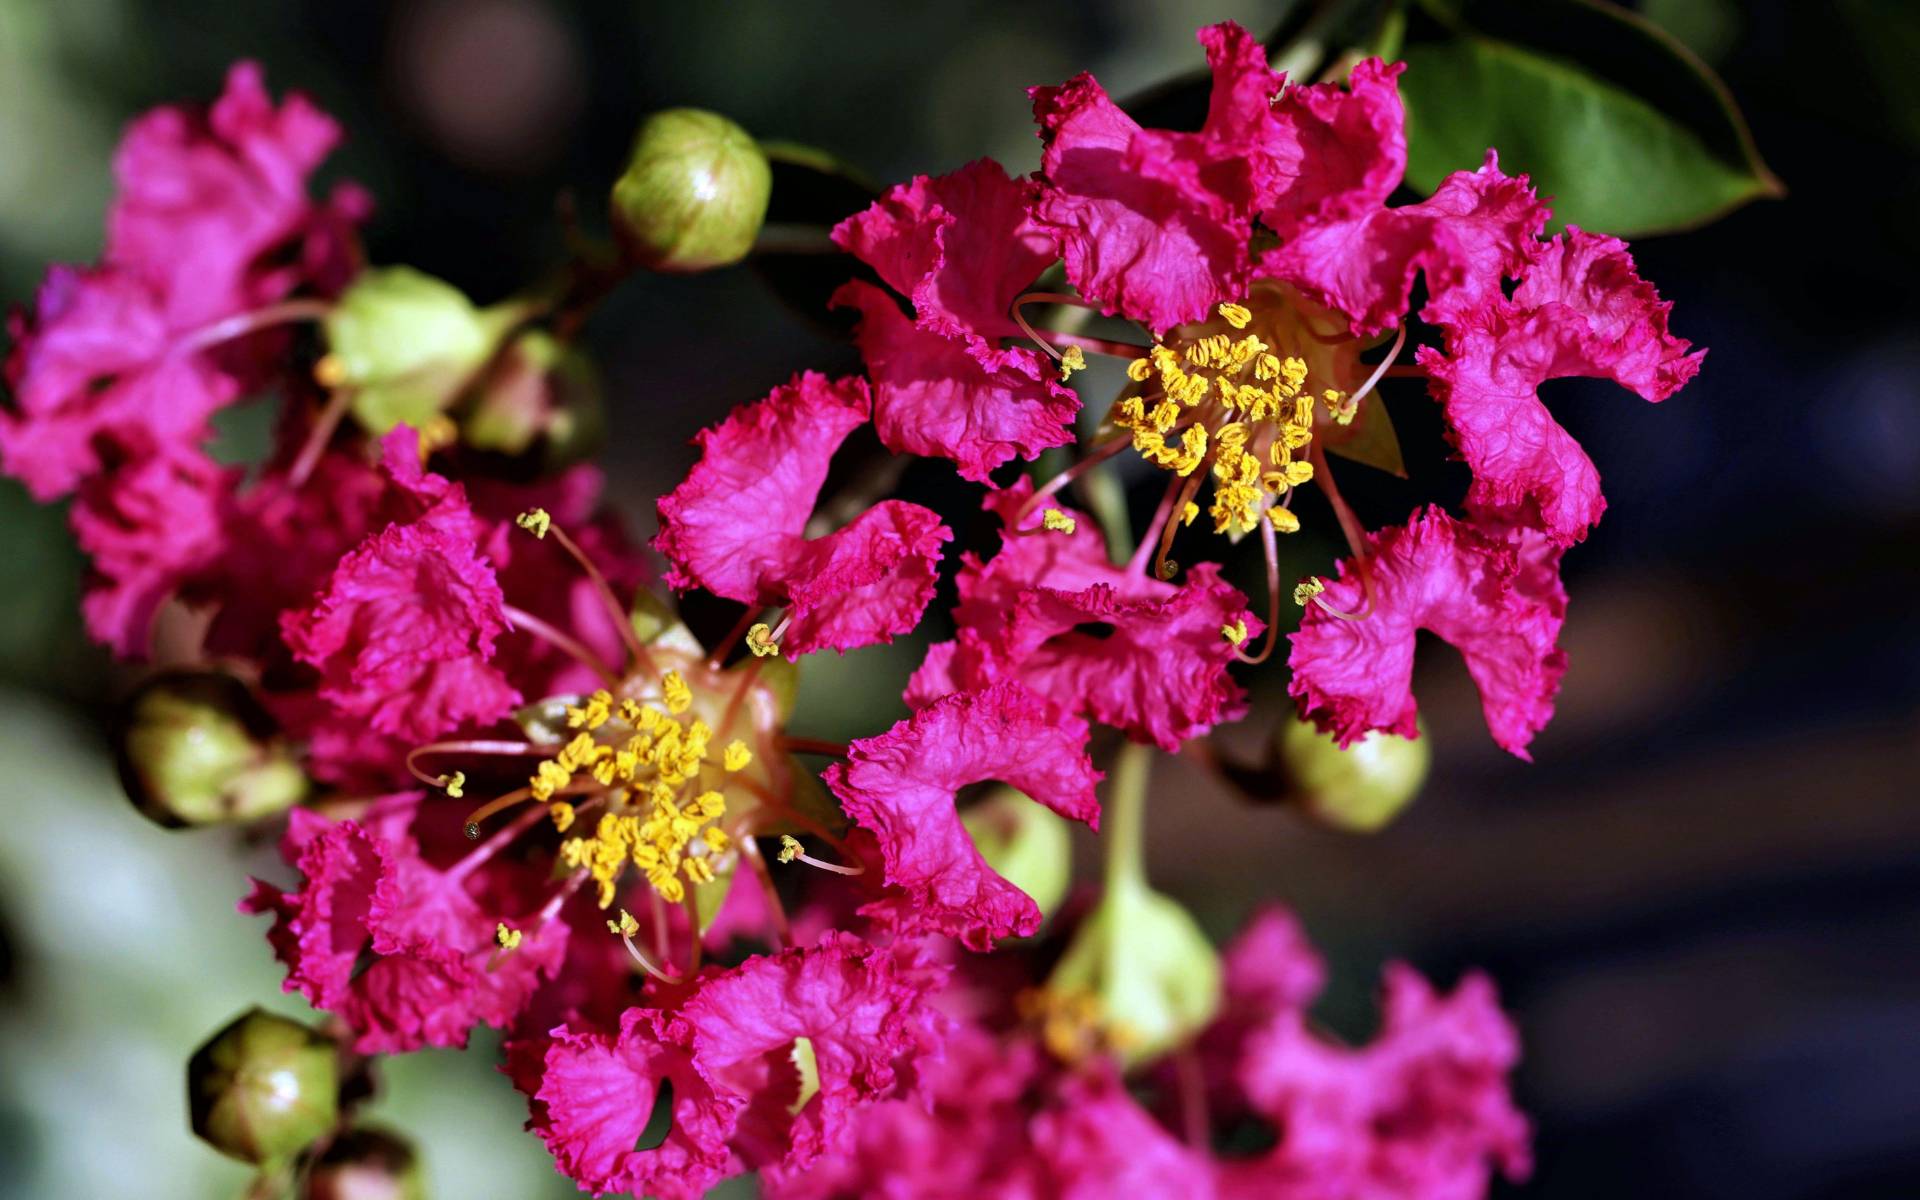 Pink crape myrtle flowers bloom with wrinkly petals surrounding yellow stamen.